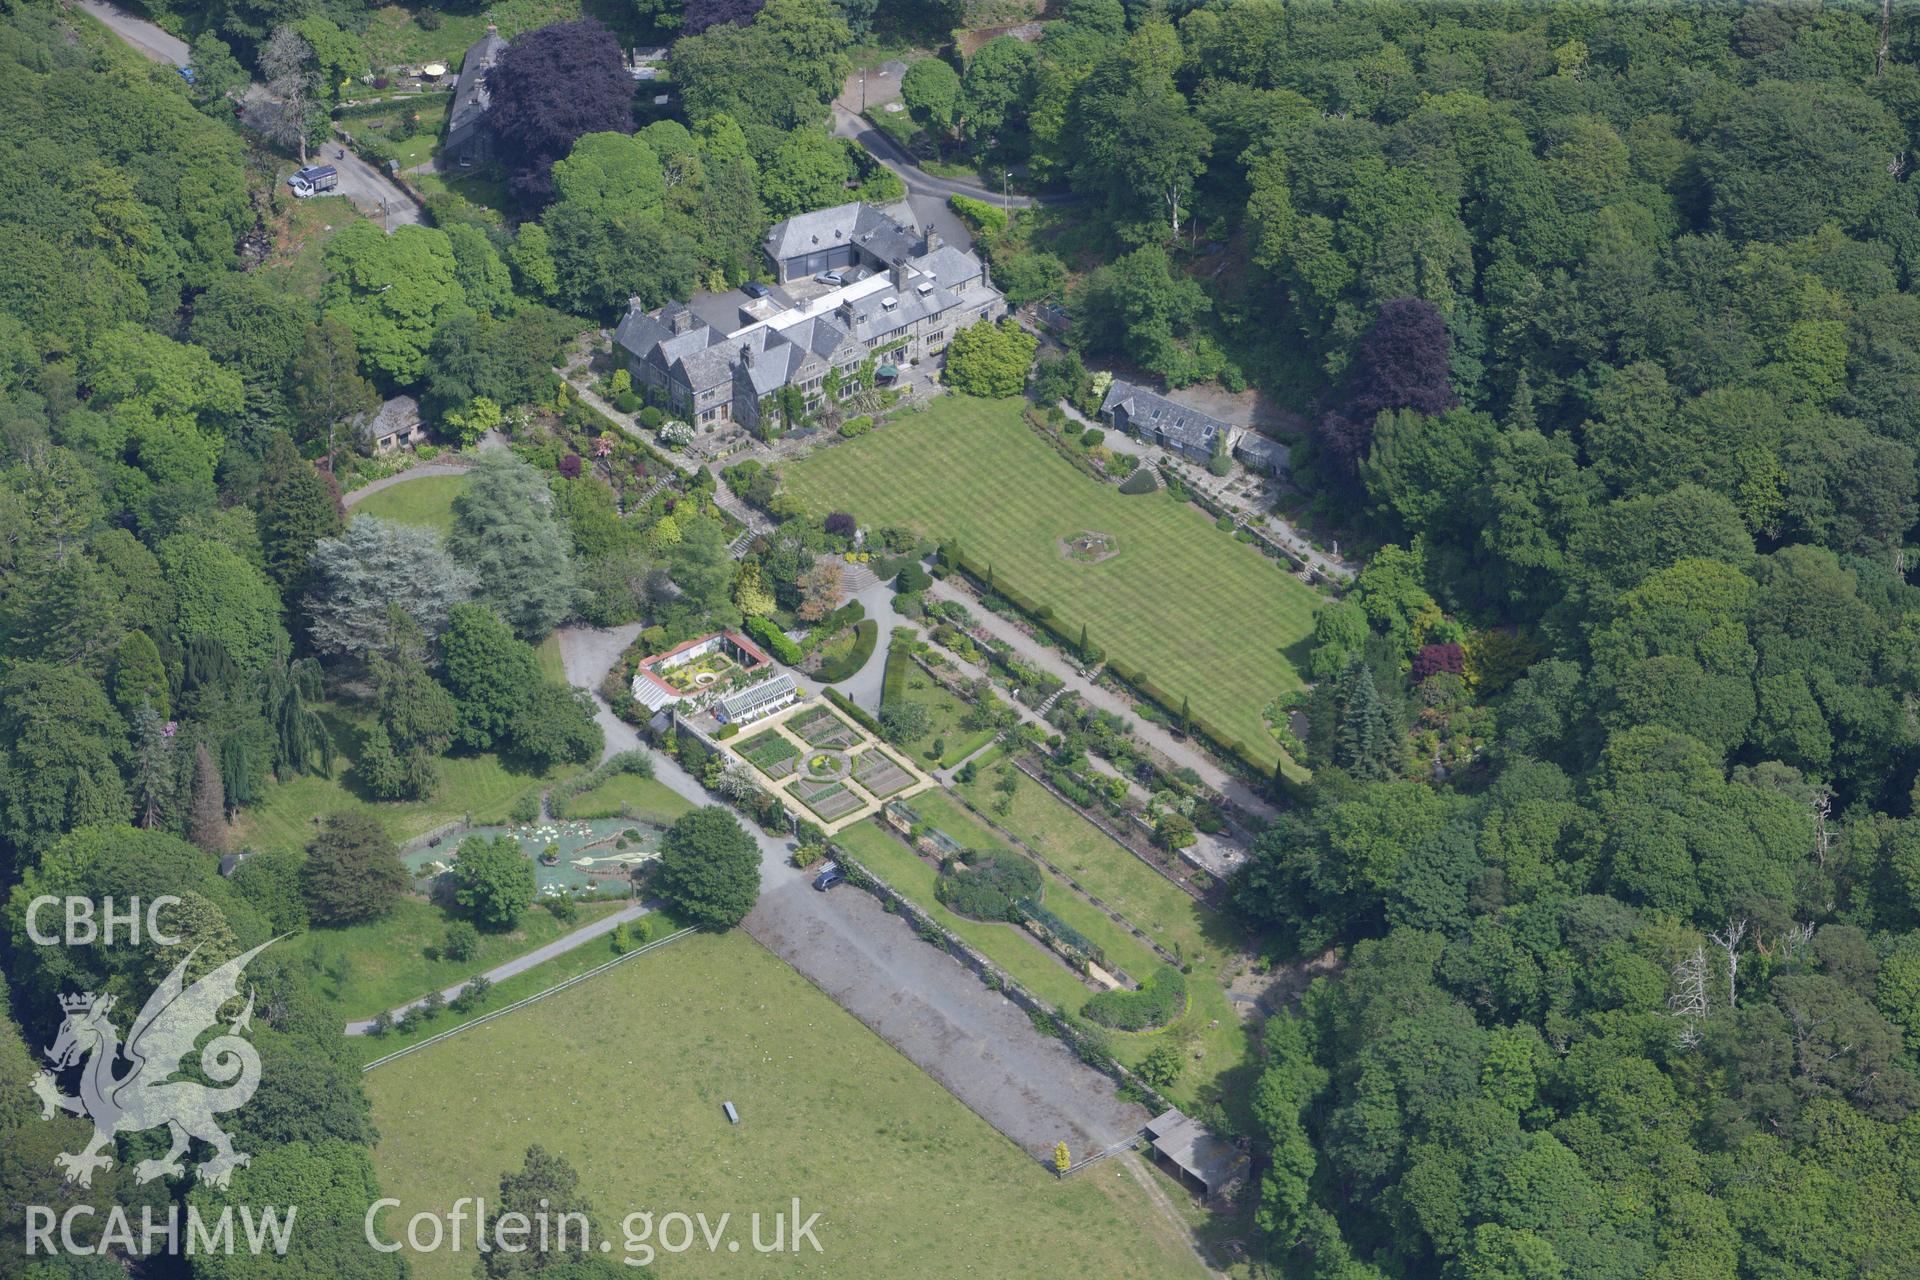 RCAHMW colour oblique aerial photograph of Aber-Artro Garden, Llanbedr. Taken on 16 June 2009 by Toby Driver